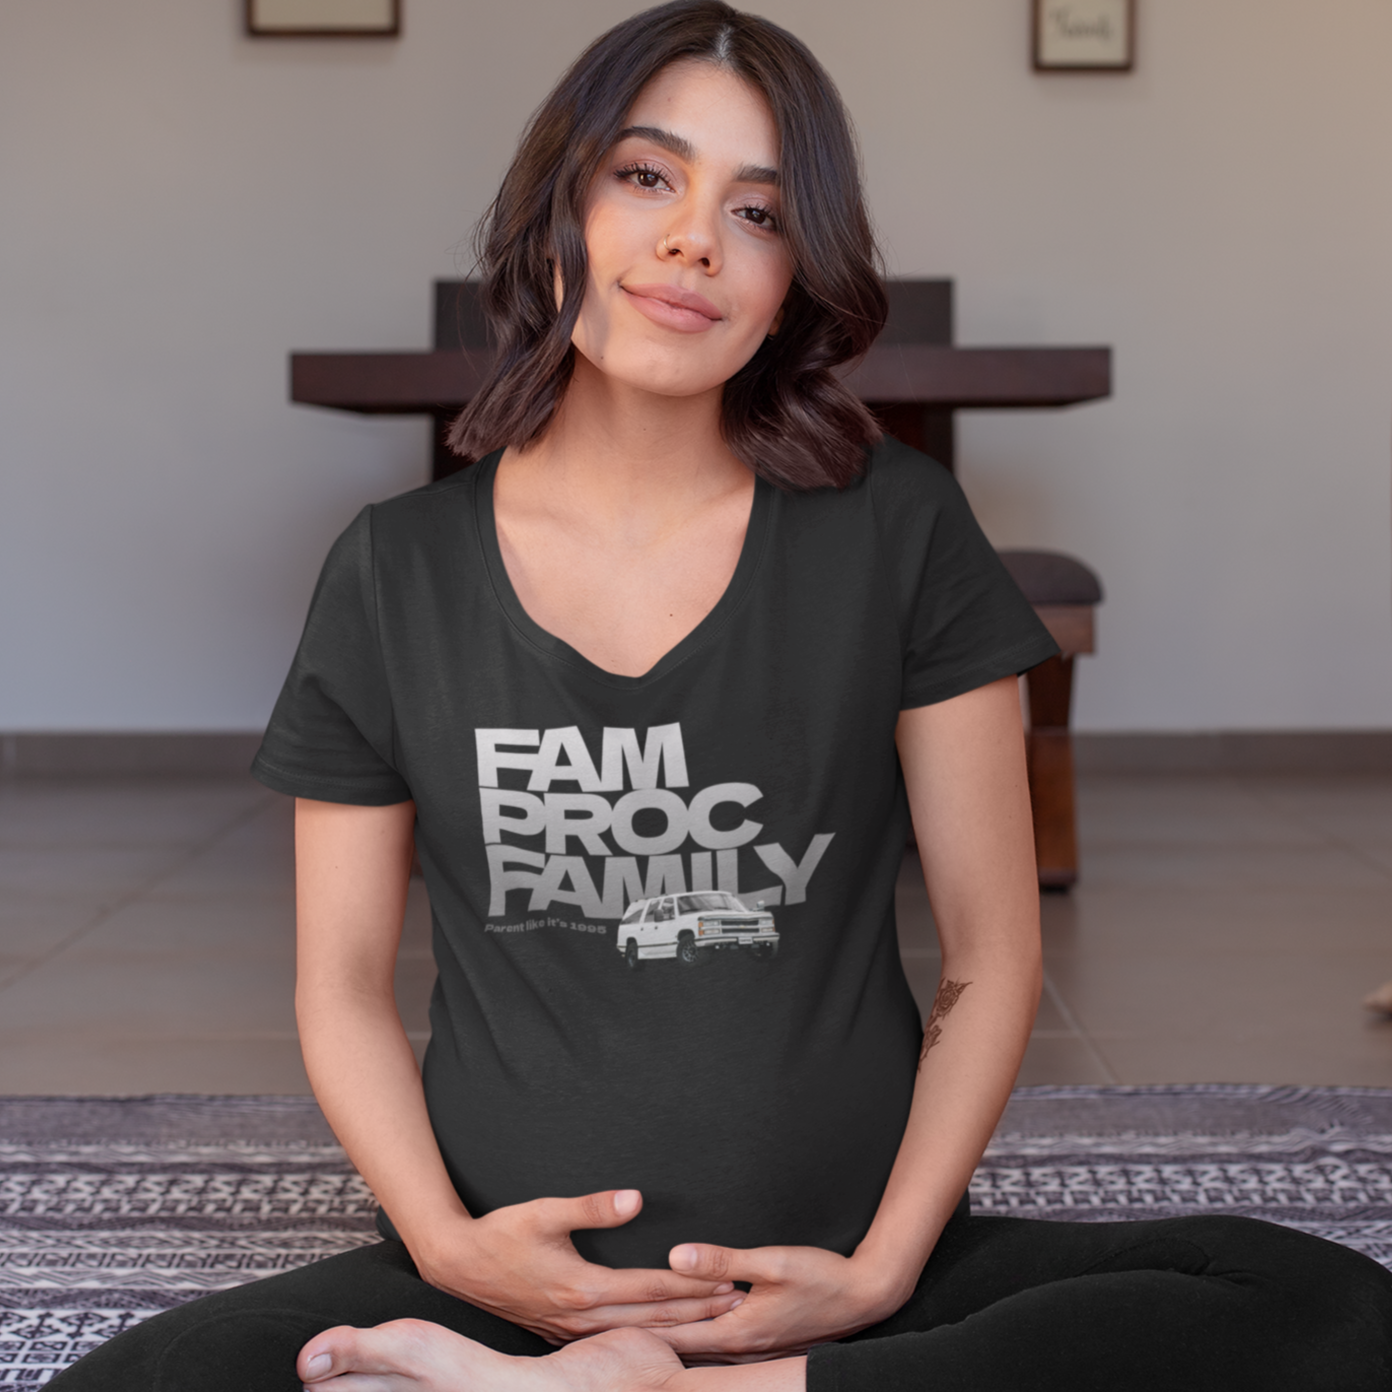 Famproc Family - Family Proclamation Maternity Shirt